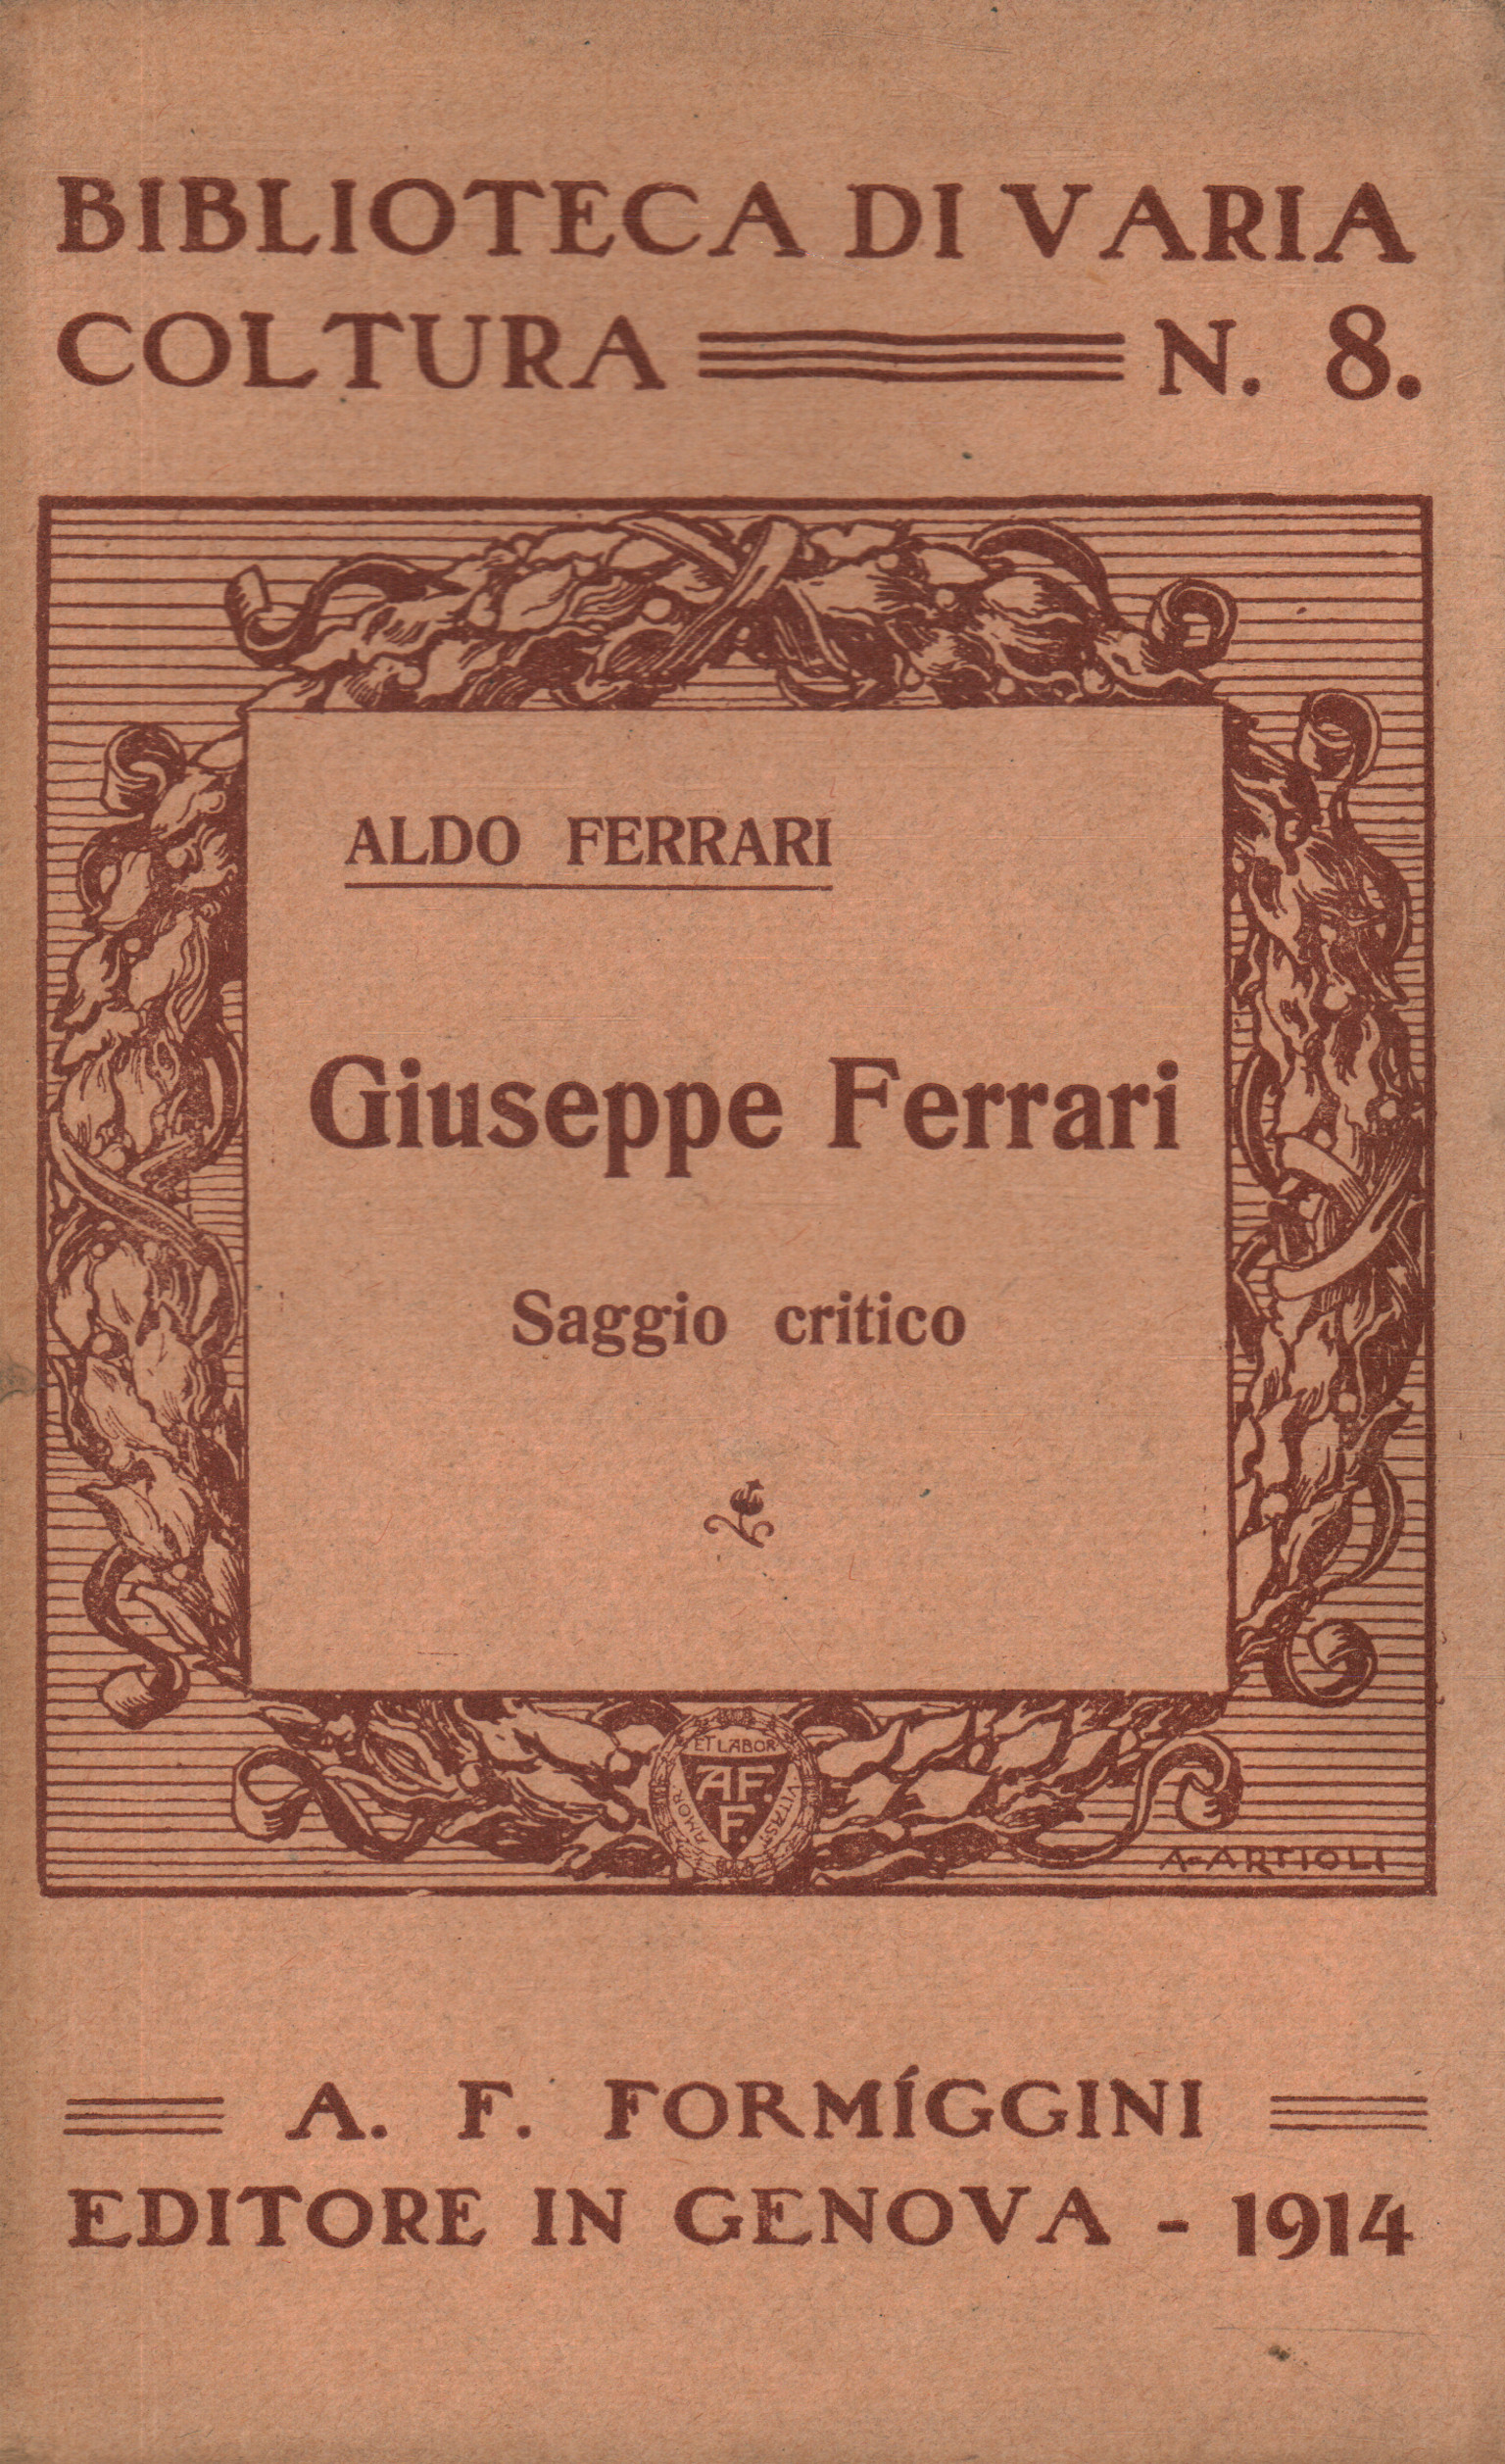 Giuseppe Ferrari. Critical essay